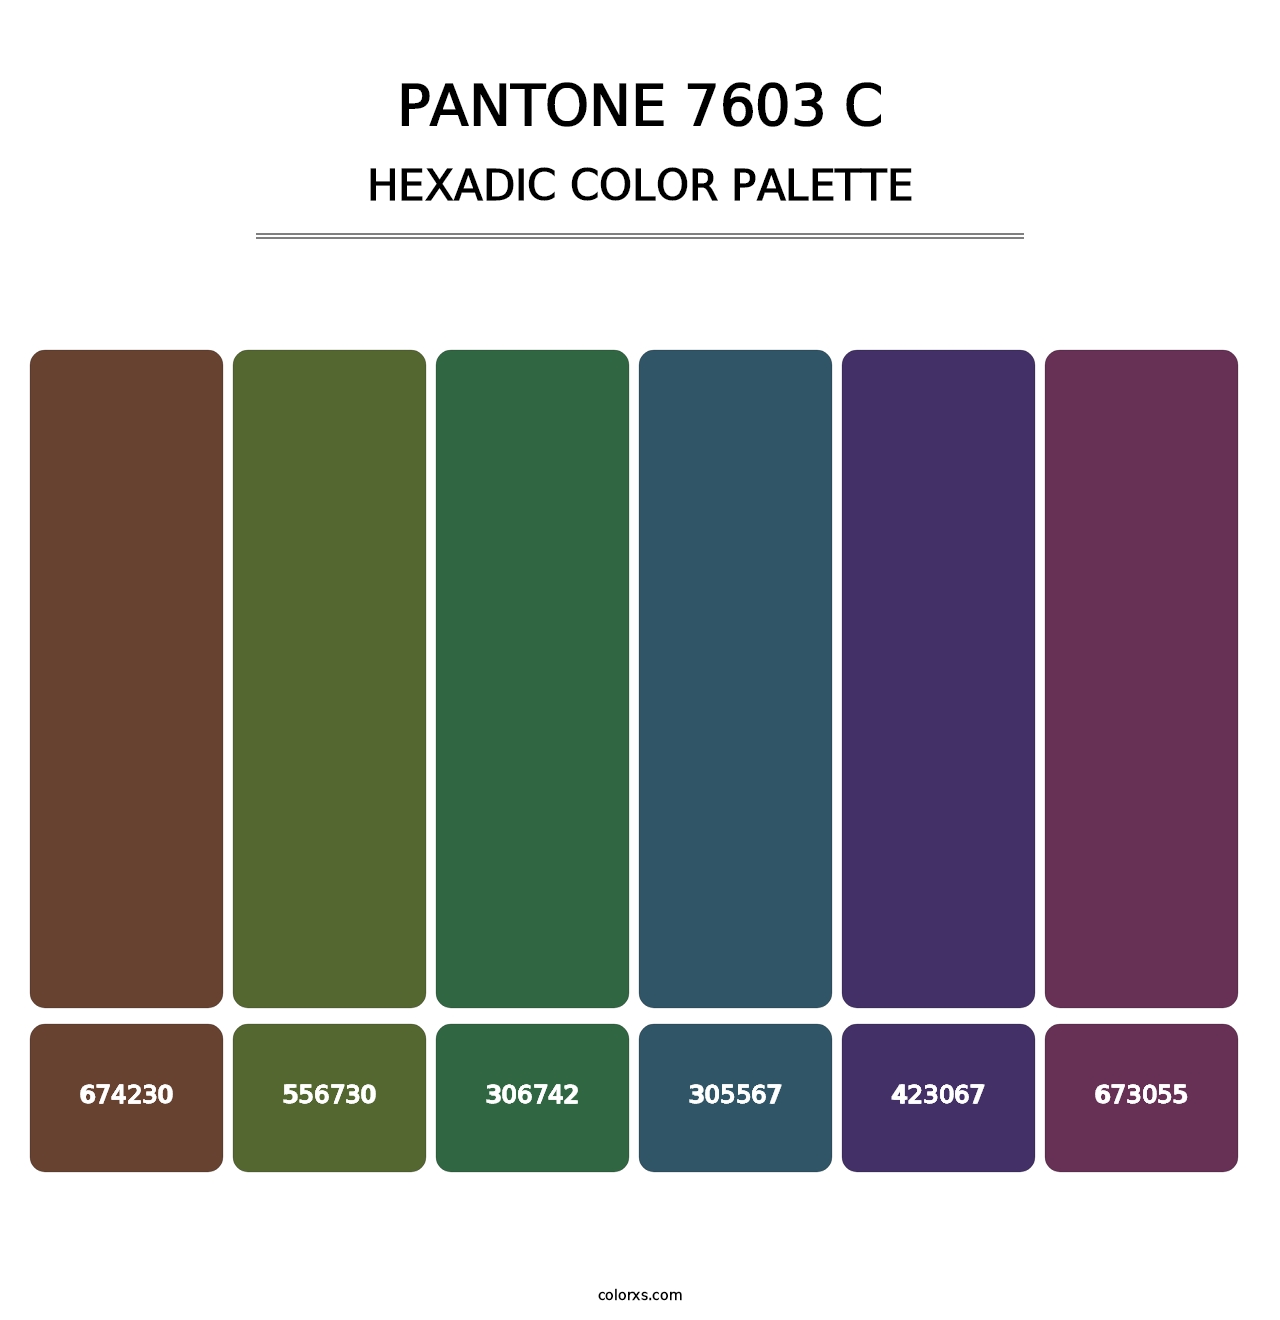 PANTONE 7603 C - Hexadic Color Palette